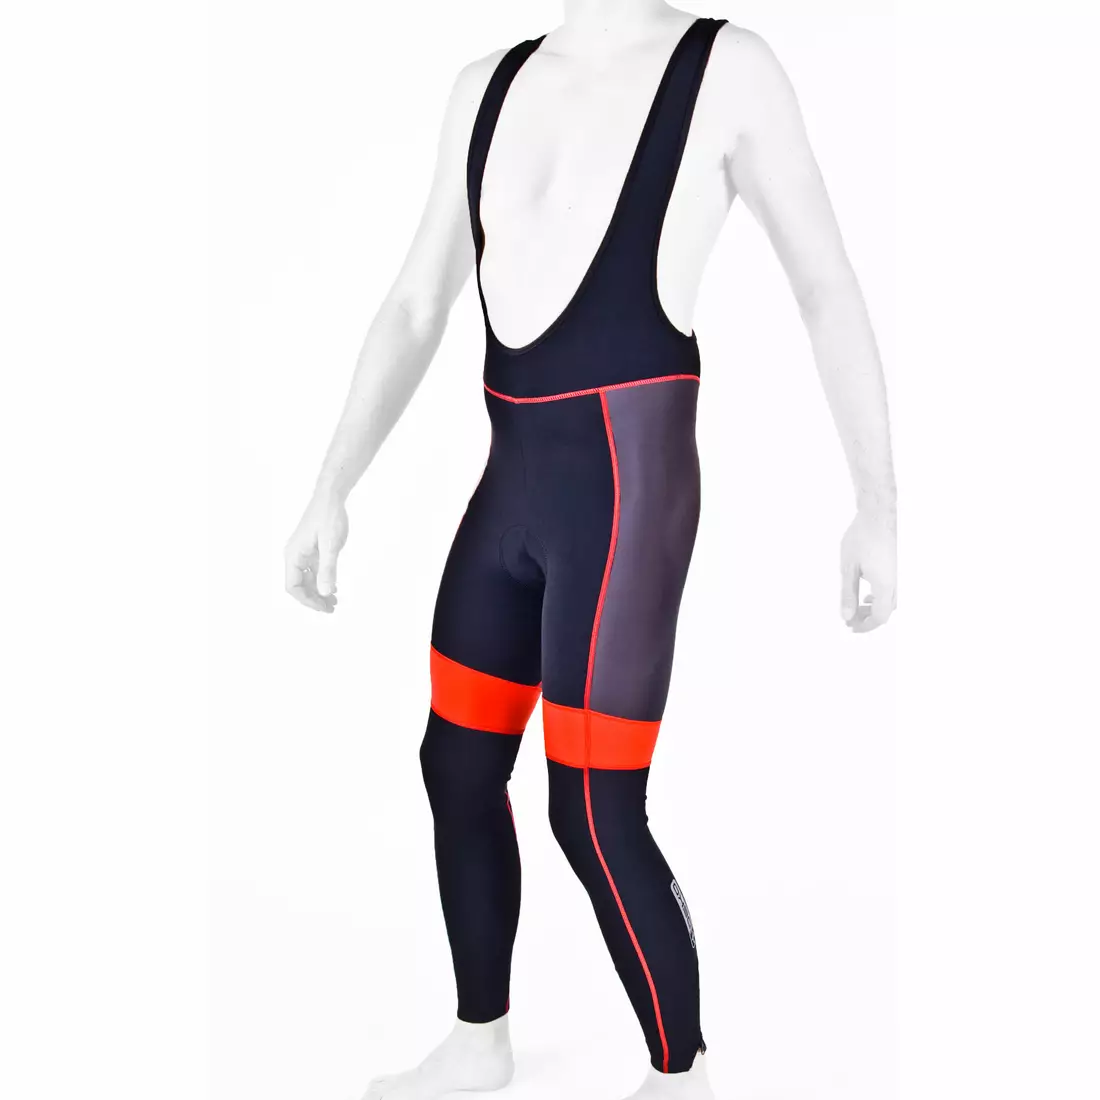 DEKO BOVO D-Robax insulated bib shorts black and red DKBT-100